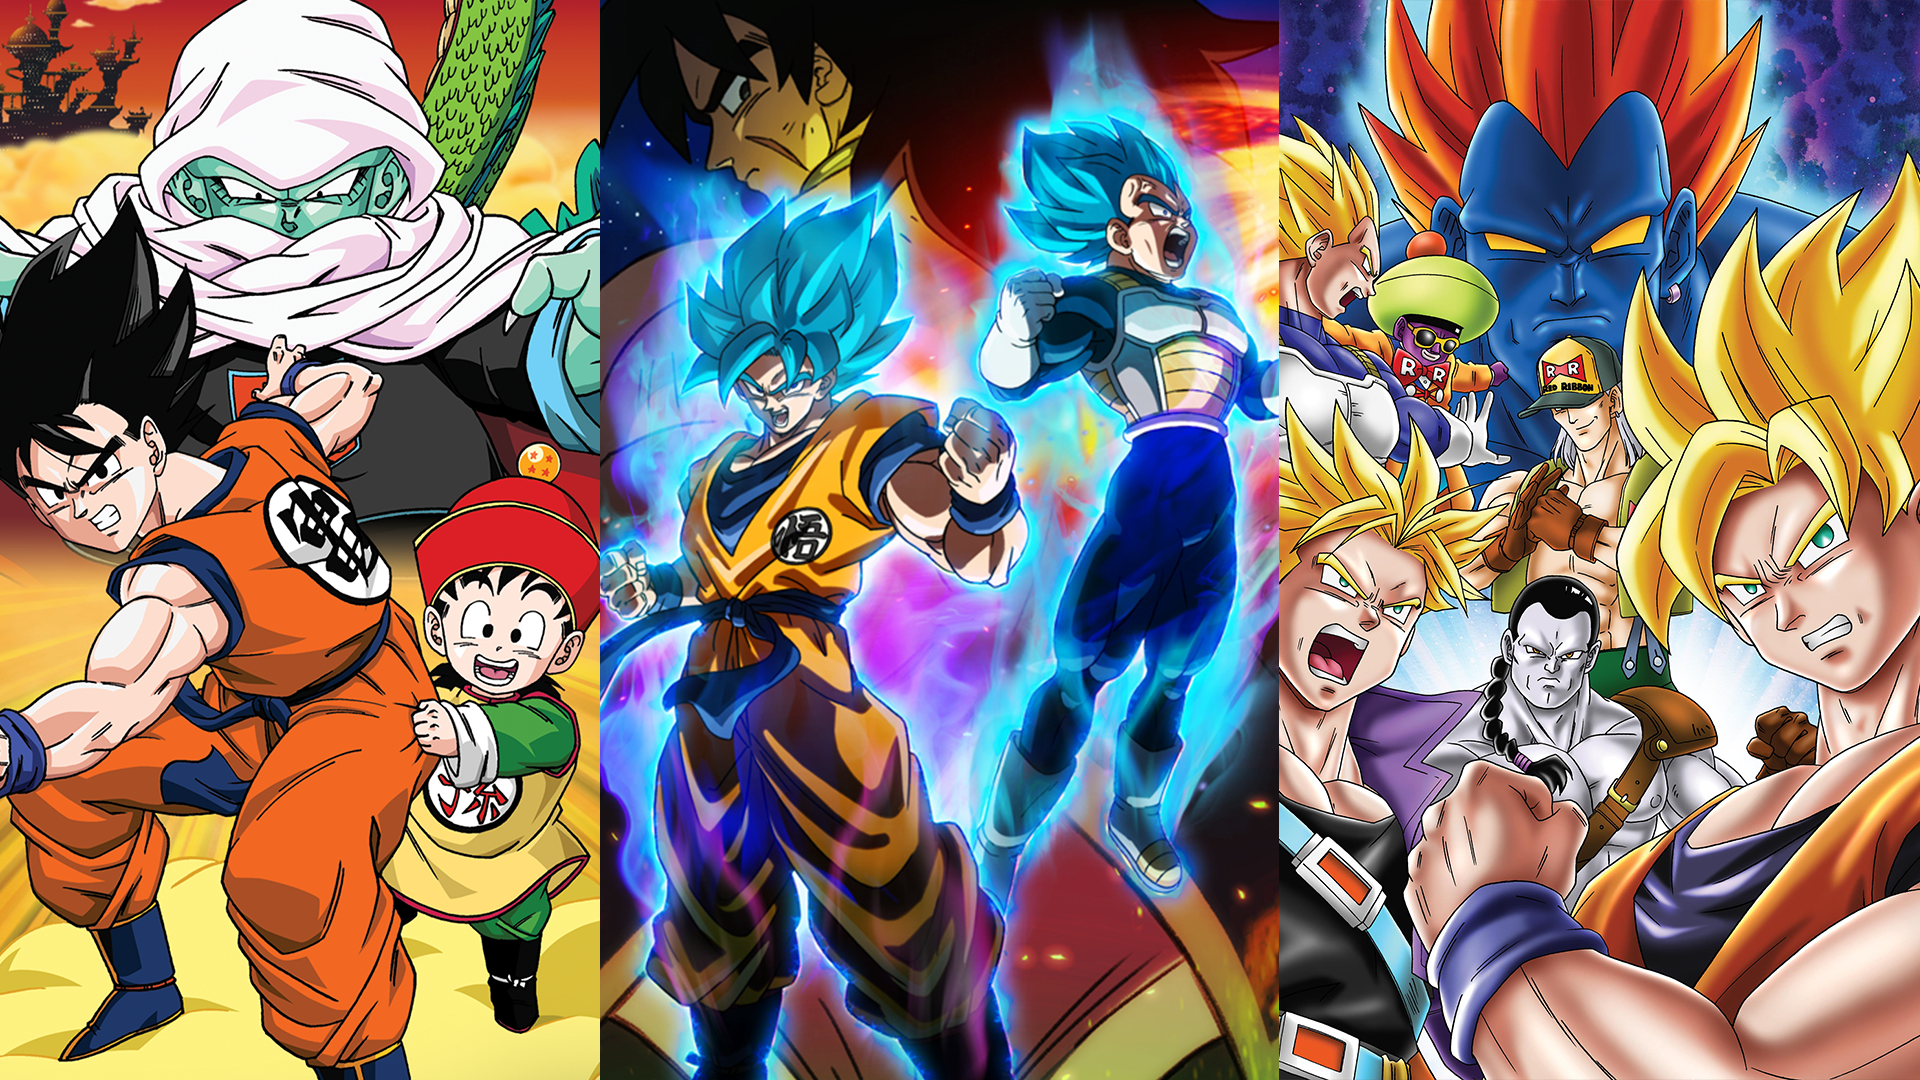 Crunchyroll announced the schedule of 15 Dragon Ball Movies - Dexerto